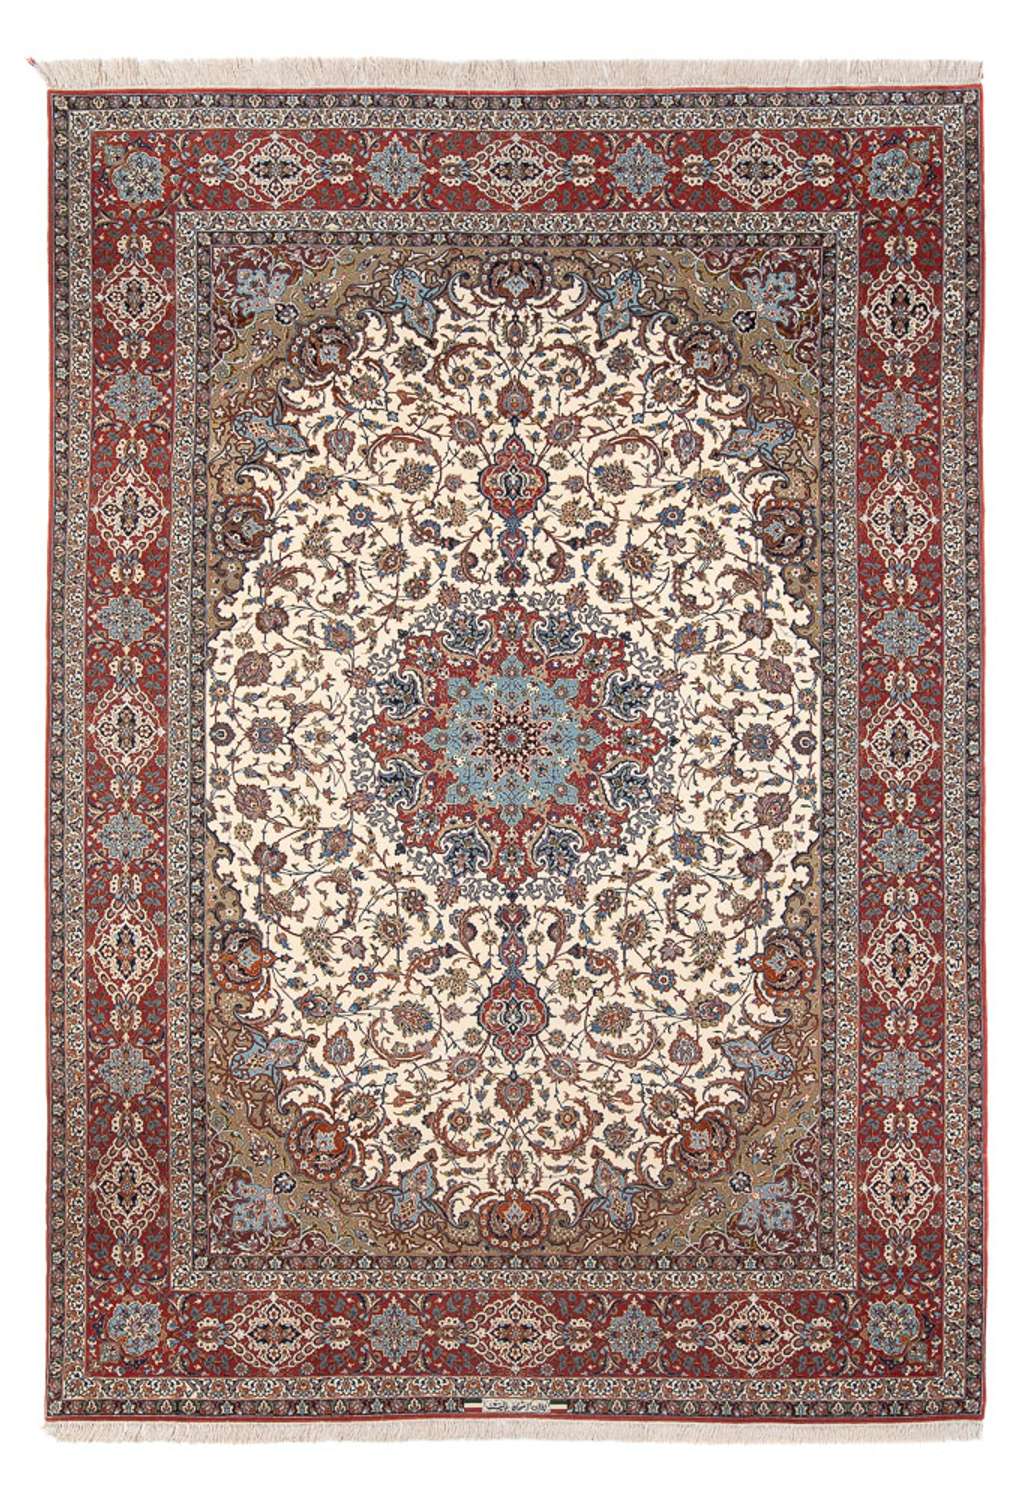 Perserteppich - Isfahan - Premium - 350 x 240 cm - creme